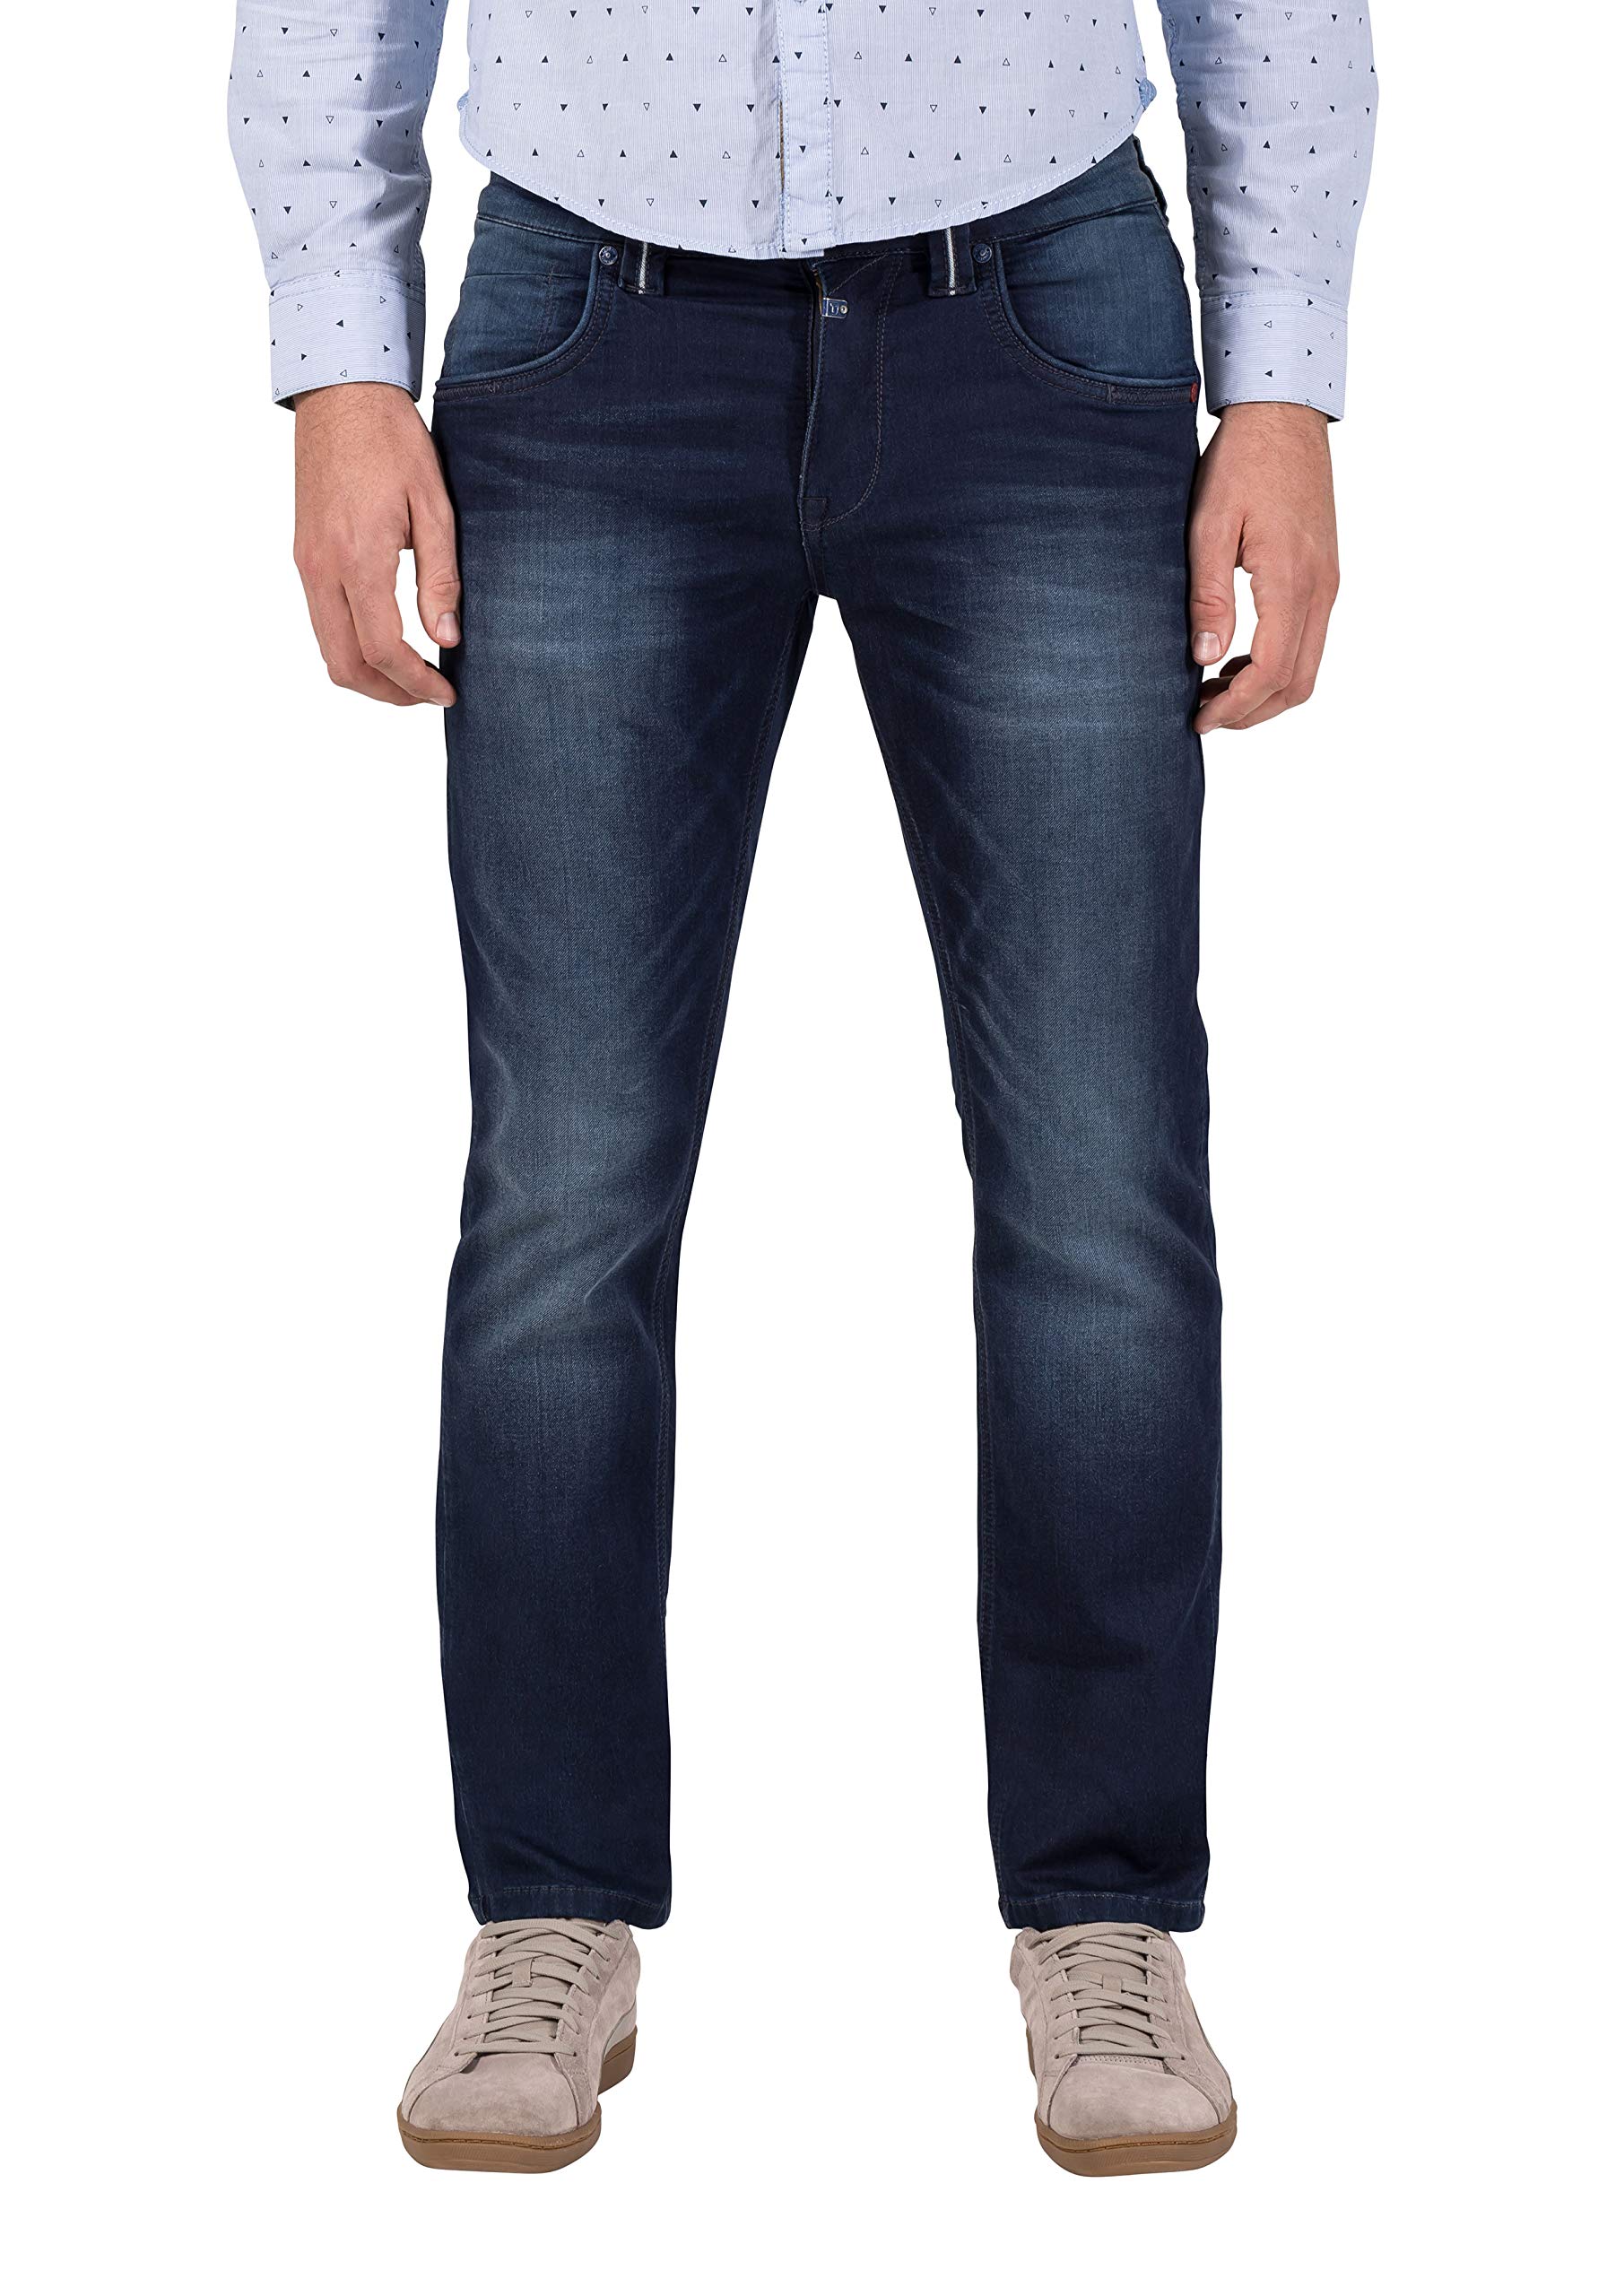 Timezone Herren EduardoTZ Jogg Slim Jeans, Blau (royal Navy wash 3501), 30W / 34L